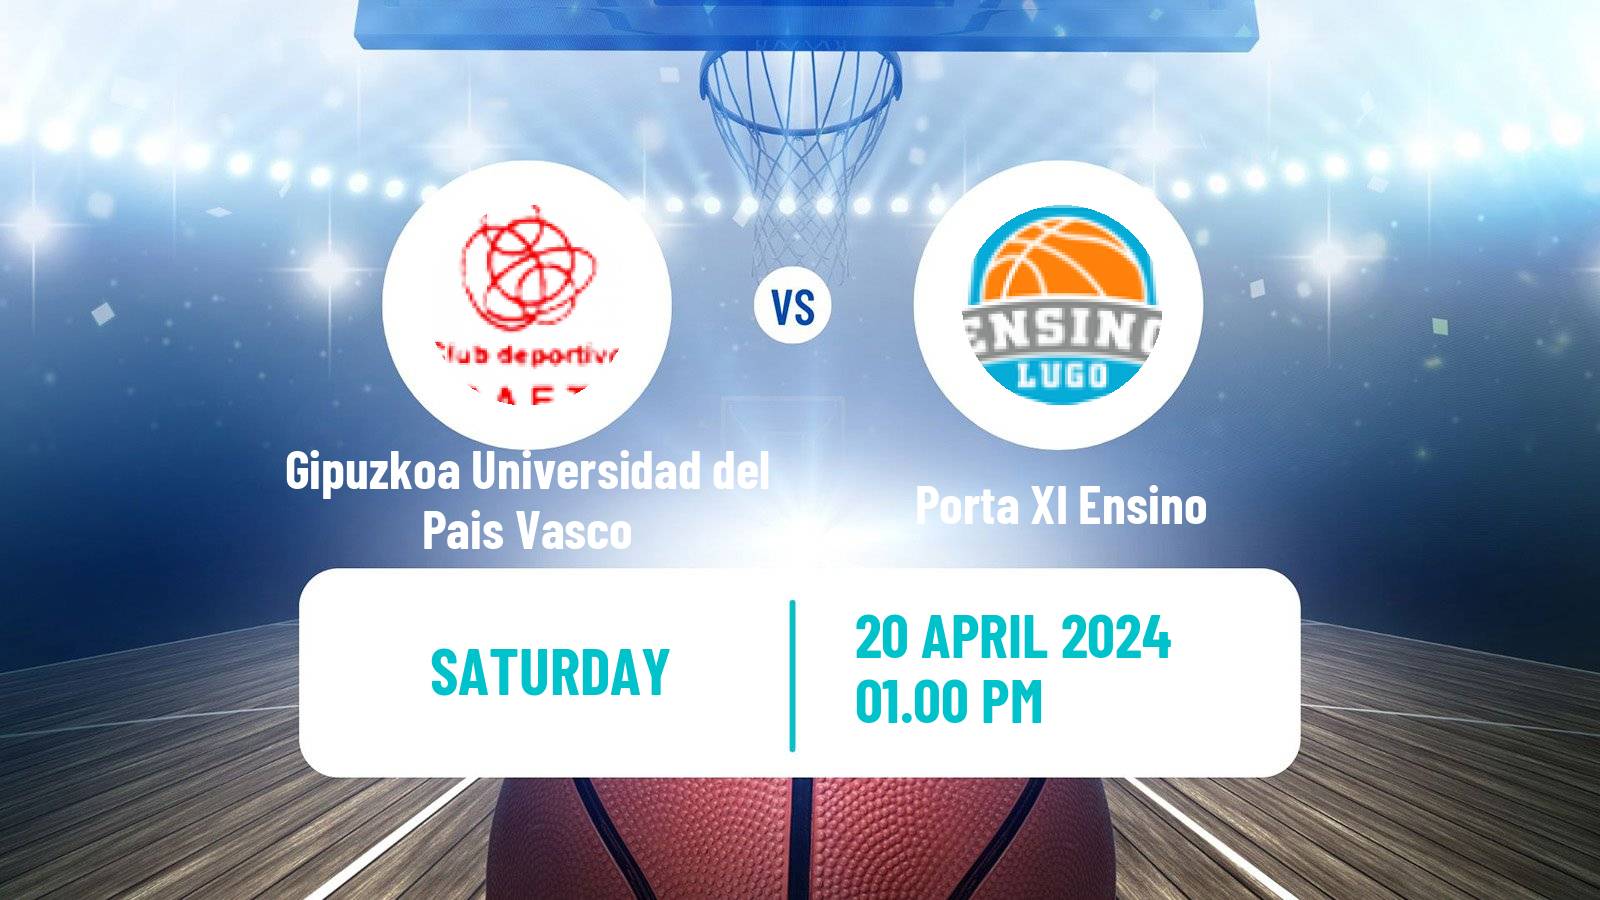 Basketball Spanish Liga Femenina Basketball Gipuzkoa Universidad del Pais Vasco - Porta XI Ensino